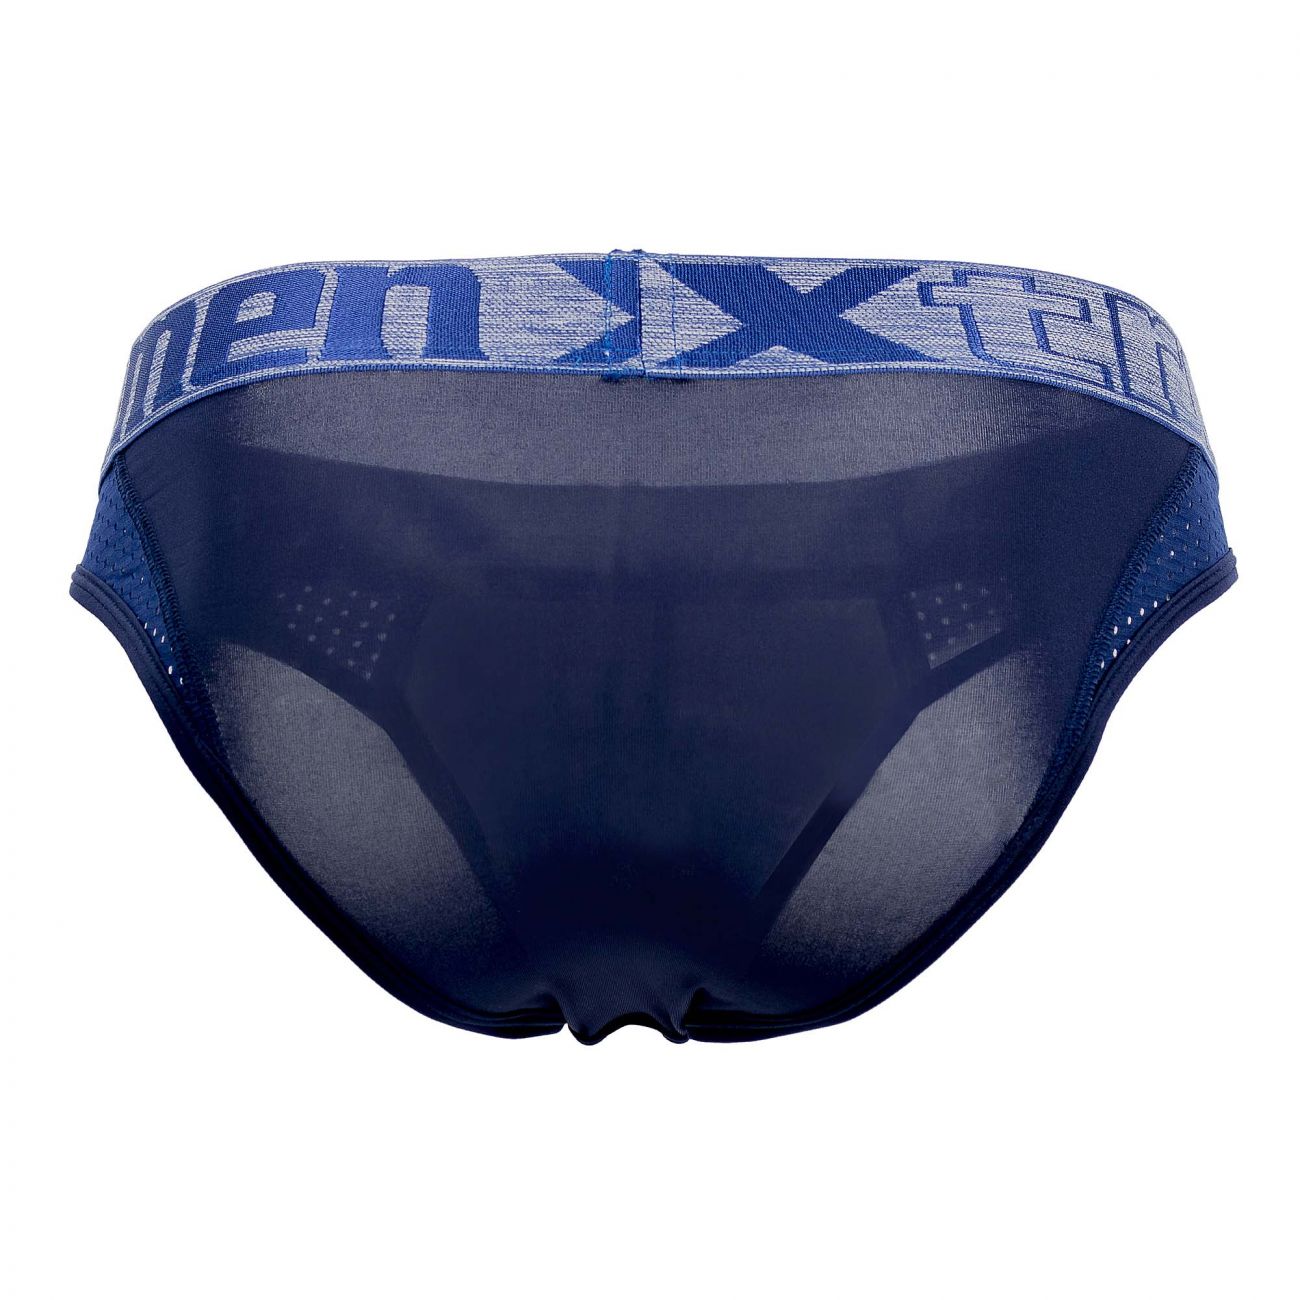 Xtremen Microfiber Bikini